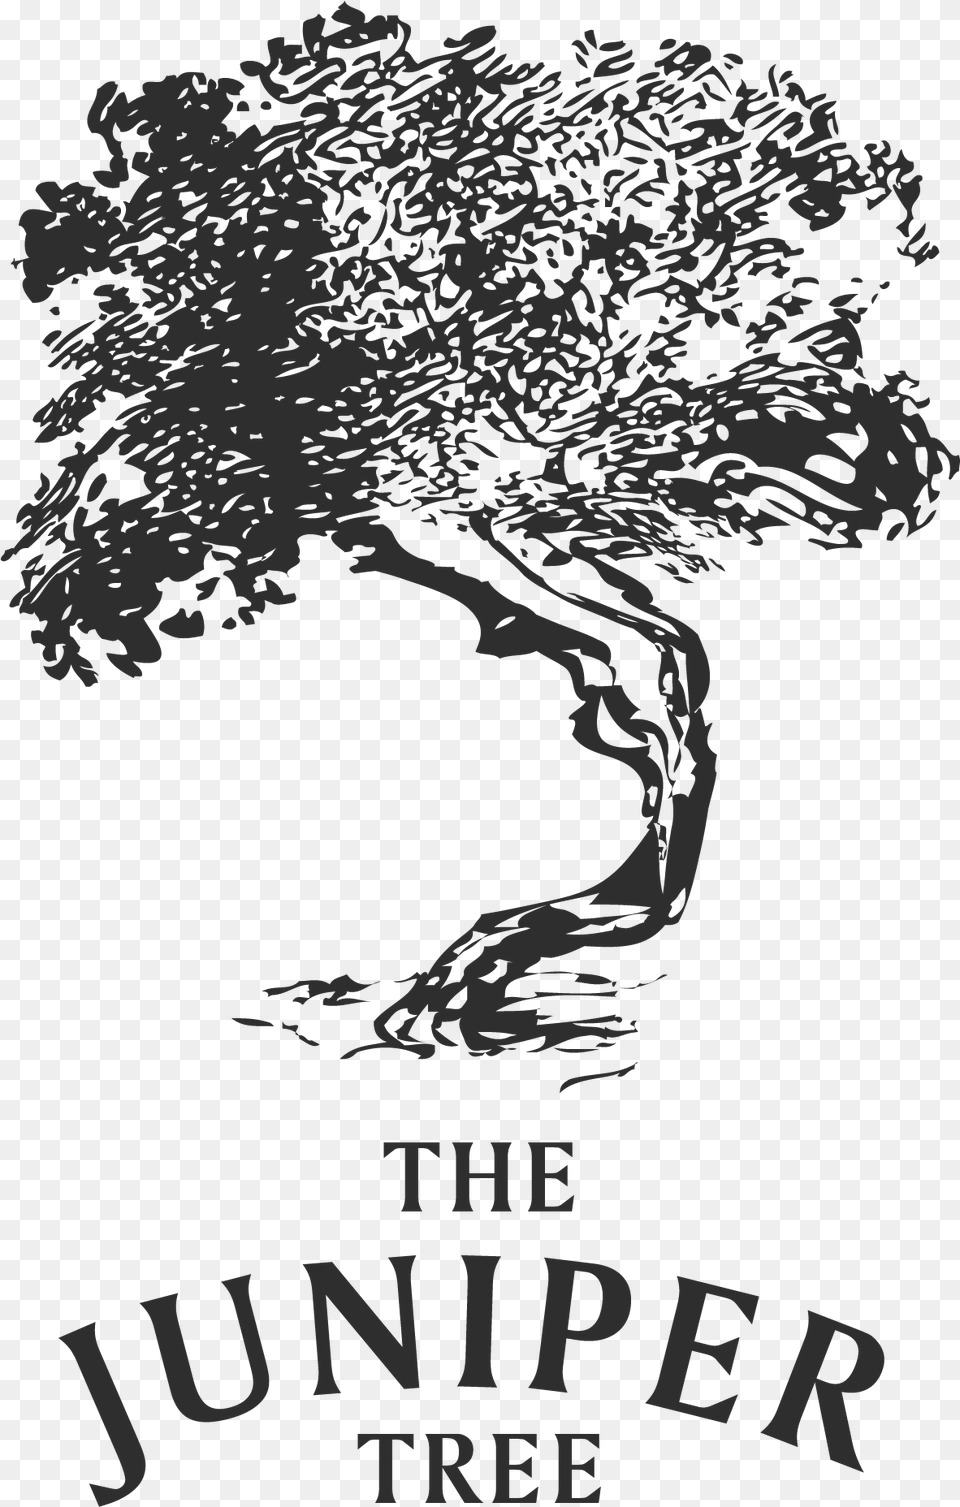 Juniper Tree Logo Full Size Image Pngkit Juniper Tree Logo, Stencil, Art, Advertisement, Poster Free Png Download